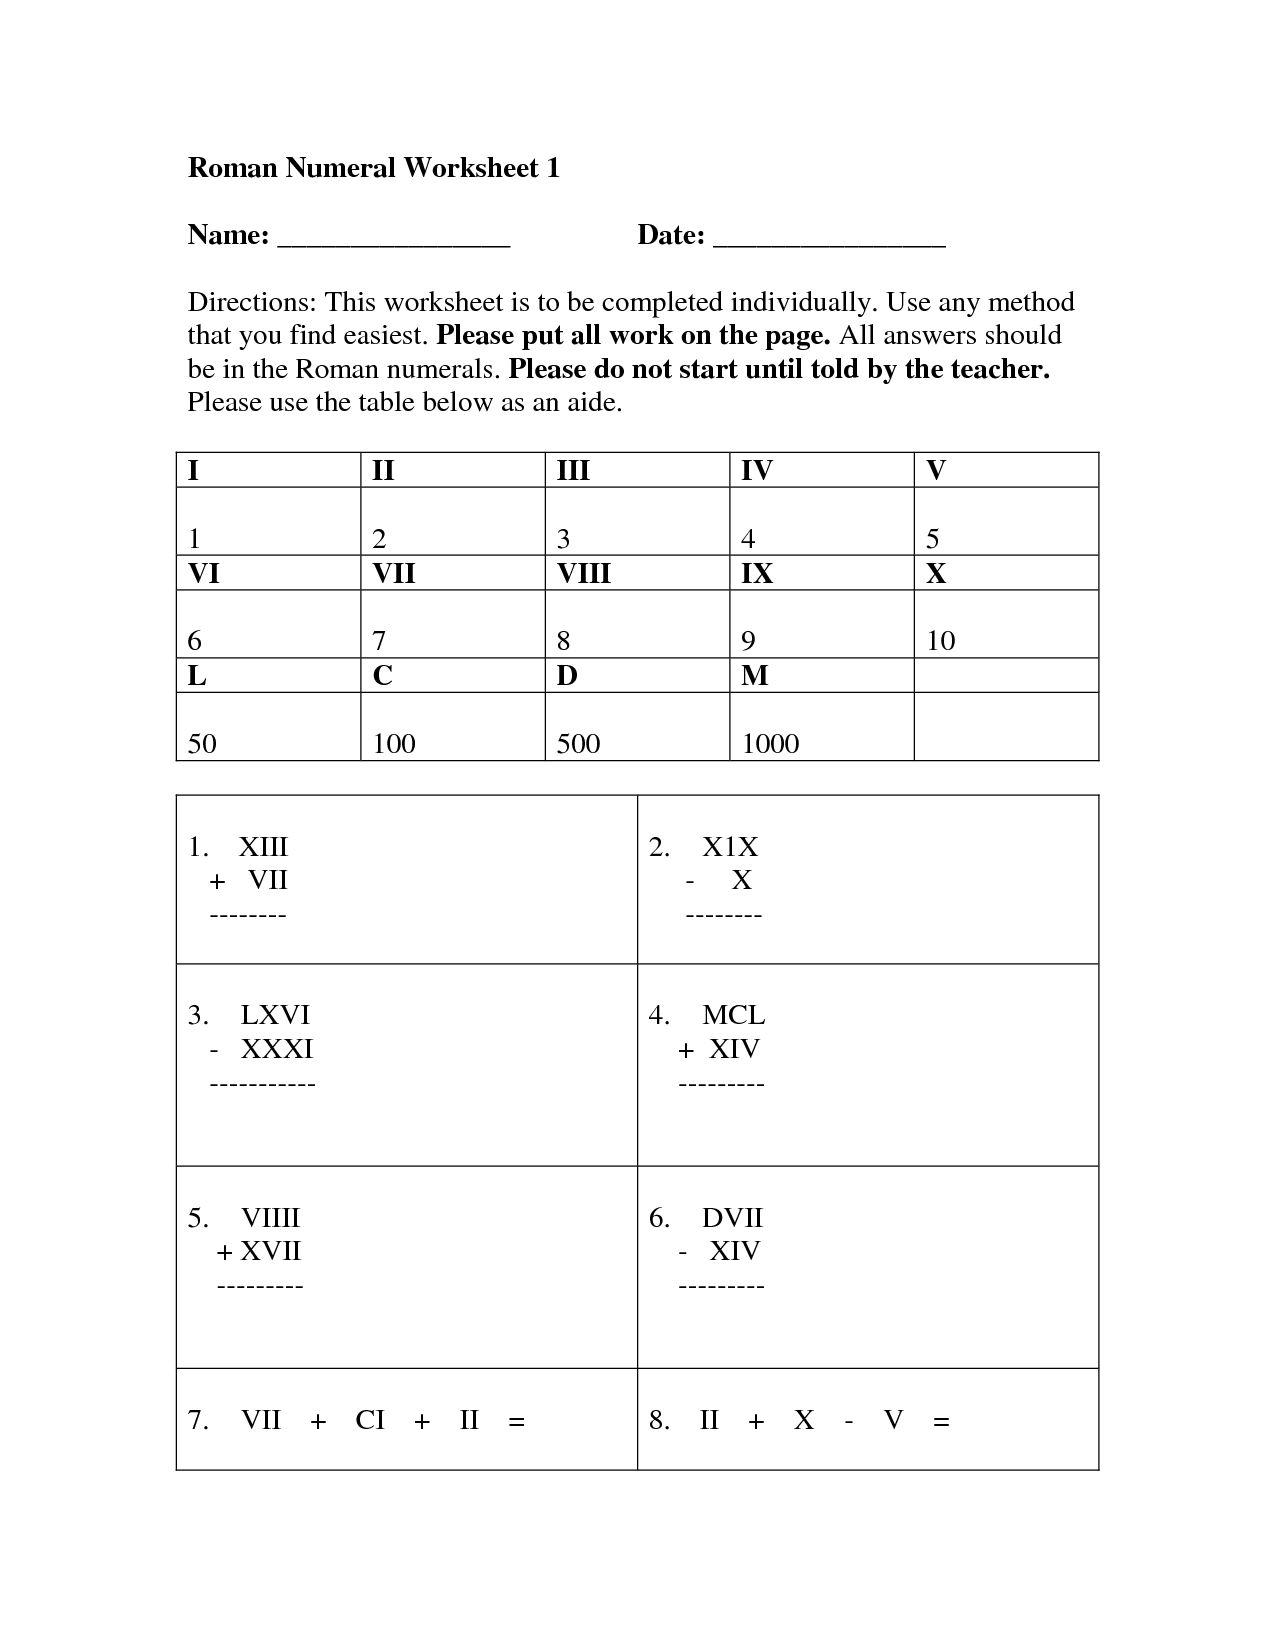 15-best-images-of-roman-numerals-1-50-worksheet-roman-numerals-printable-worksheets-roman